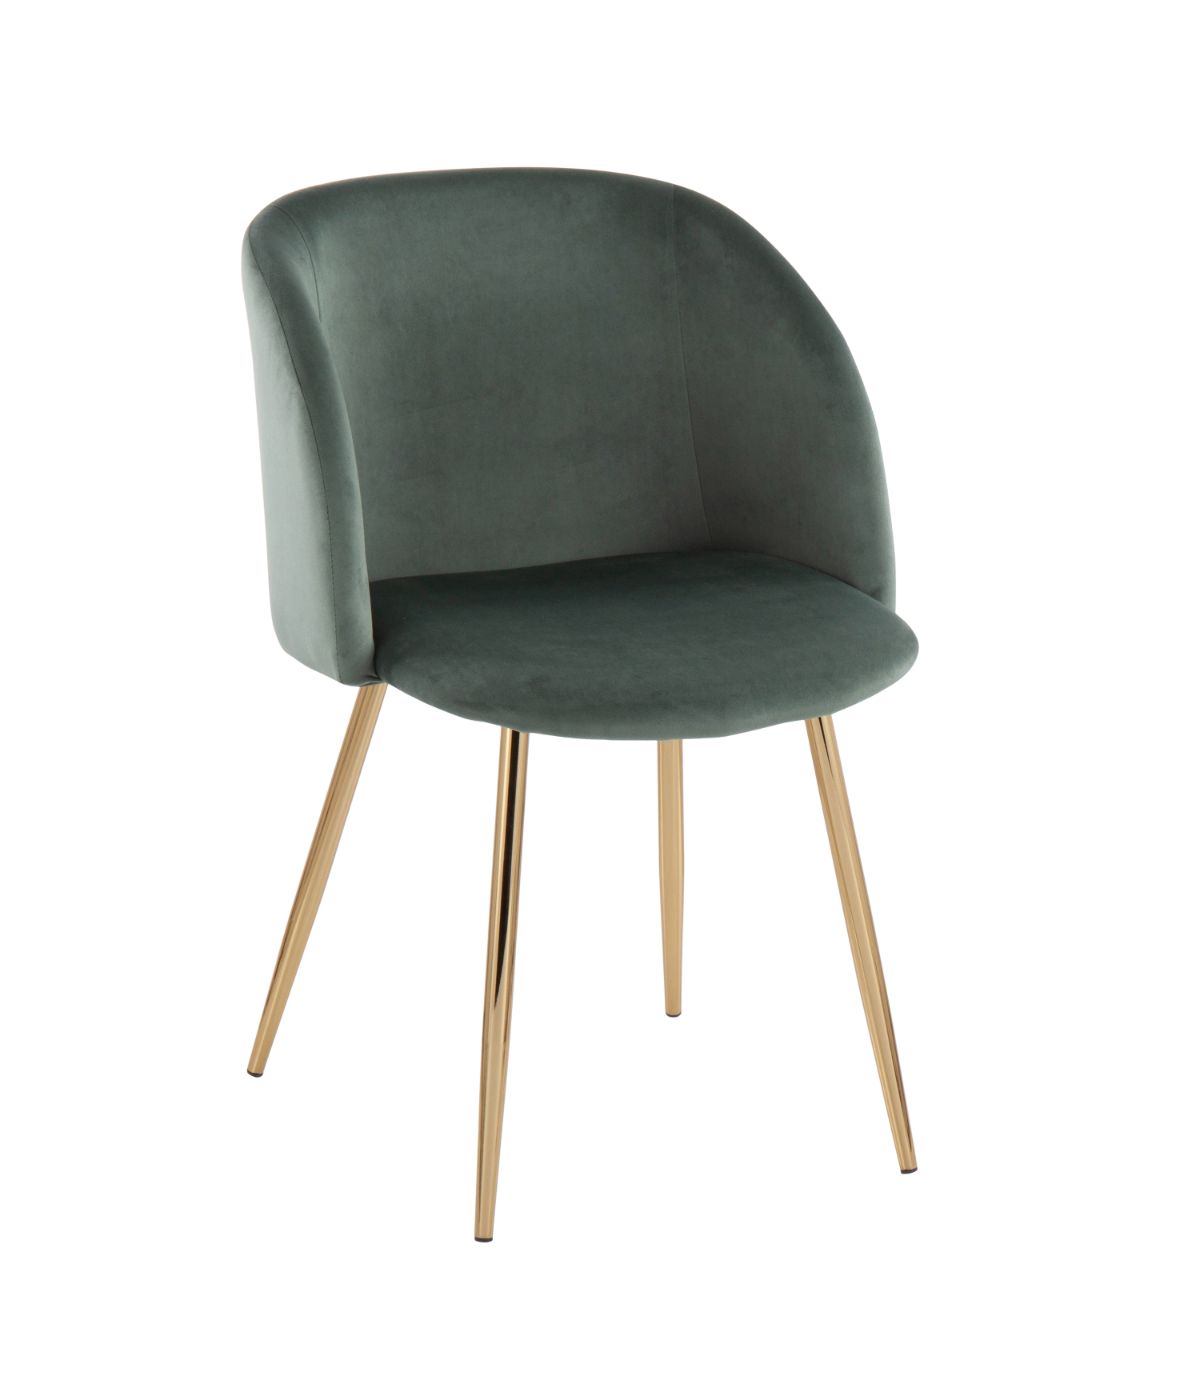 Fran Chair - Set of 2 Gold & Sage Green